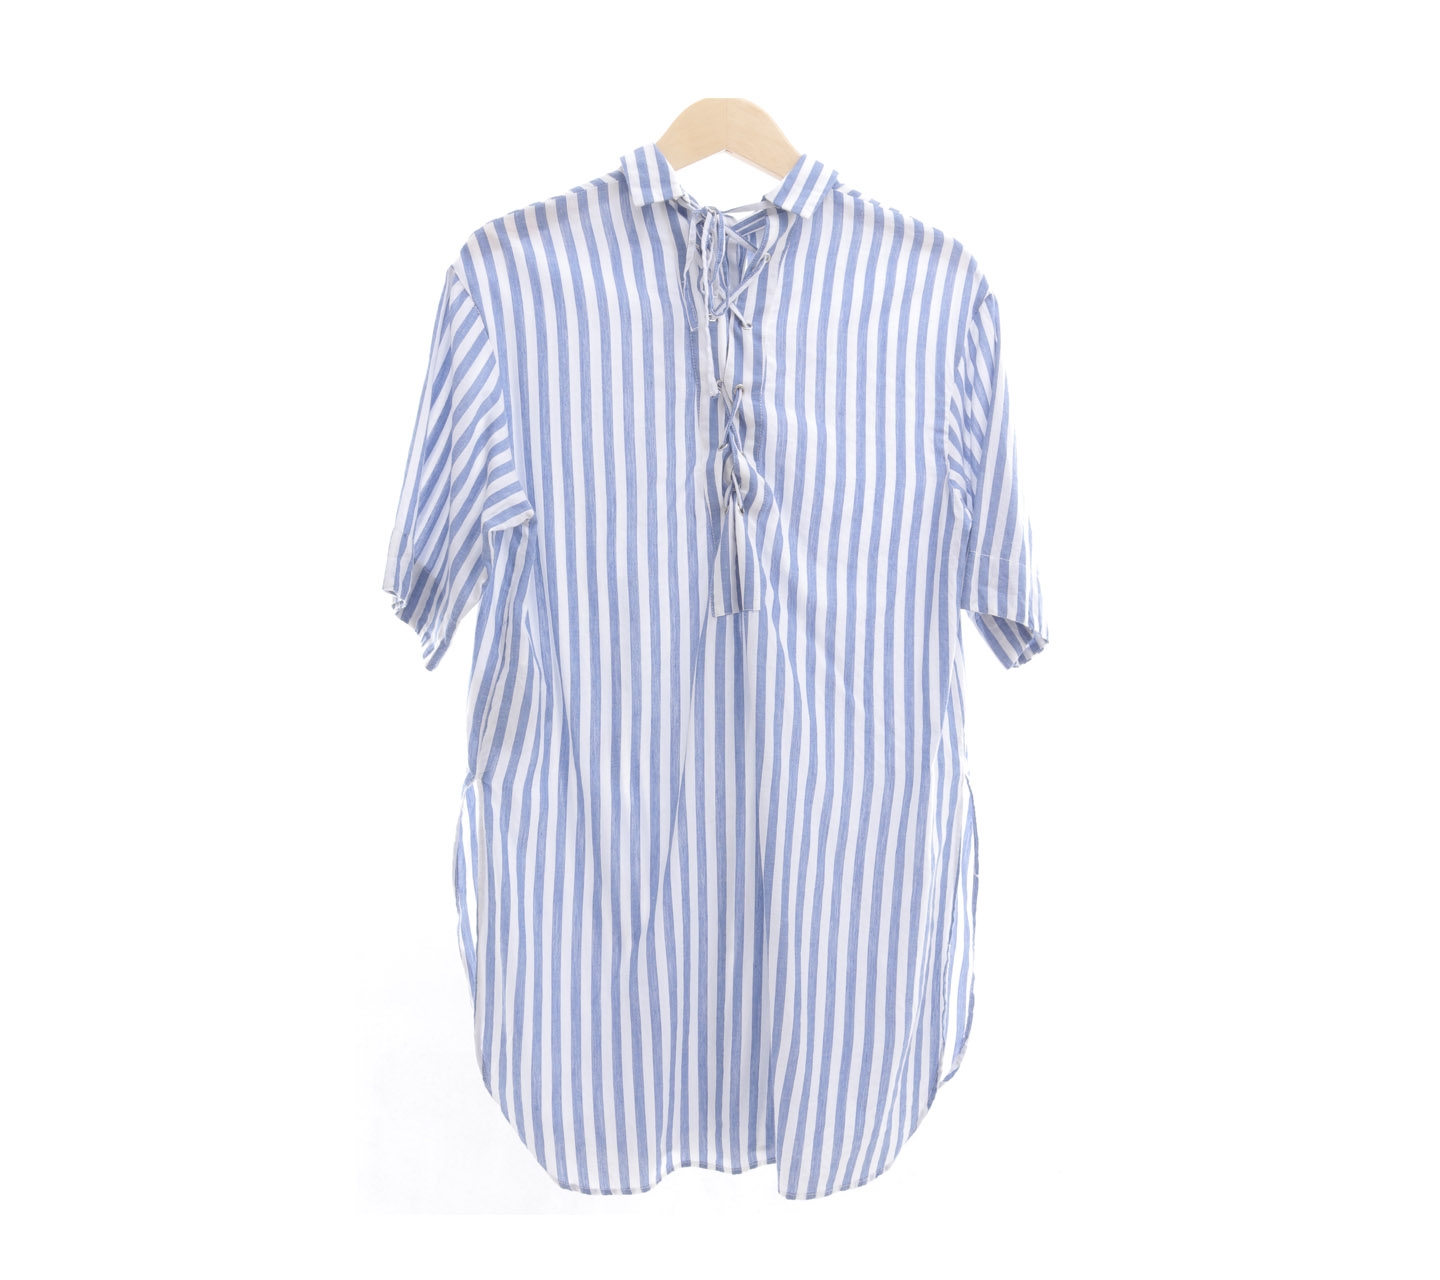 Zara Blue & White Striped Tunic Shirt